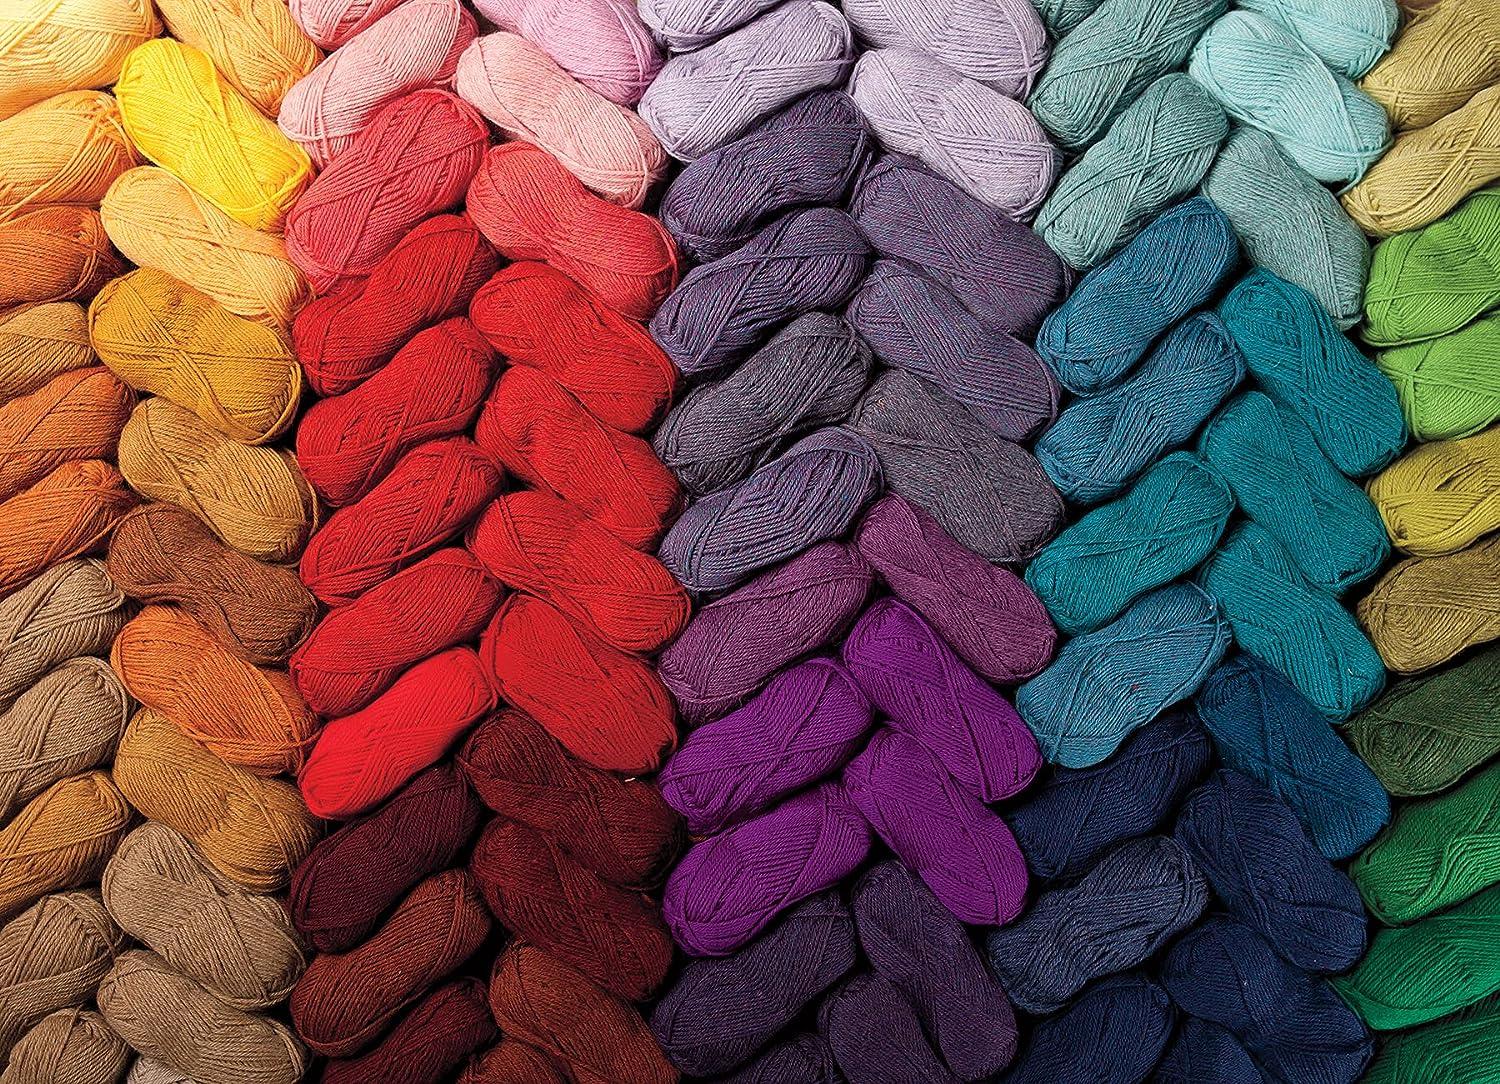 50g/Ball Worsted Section-dyeing Rainbow Yarn 100% Wool Yarn for